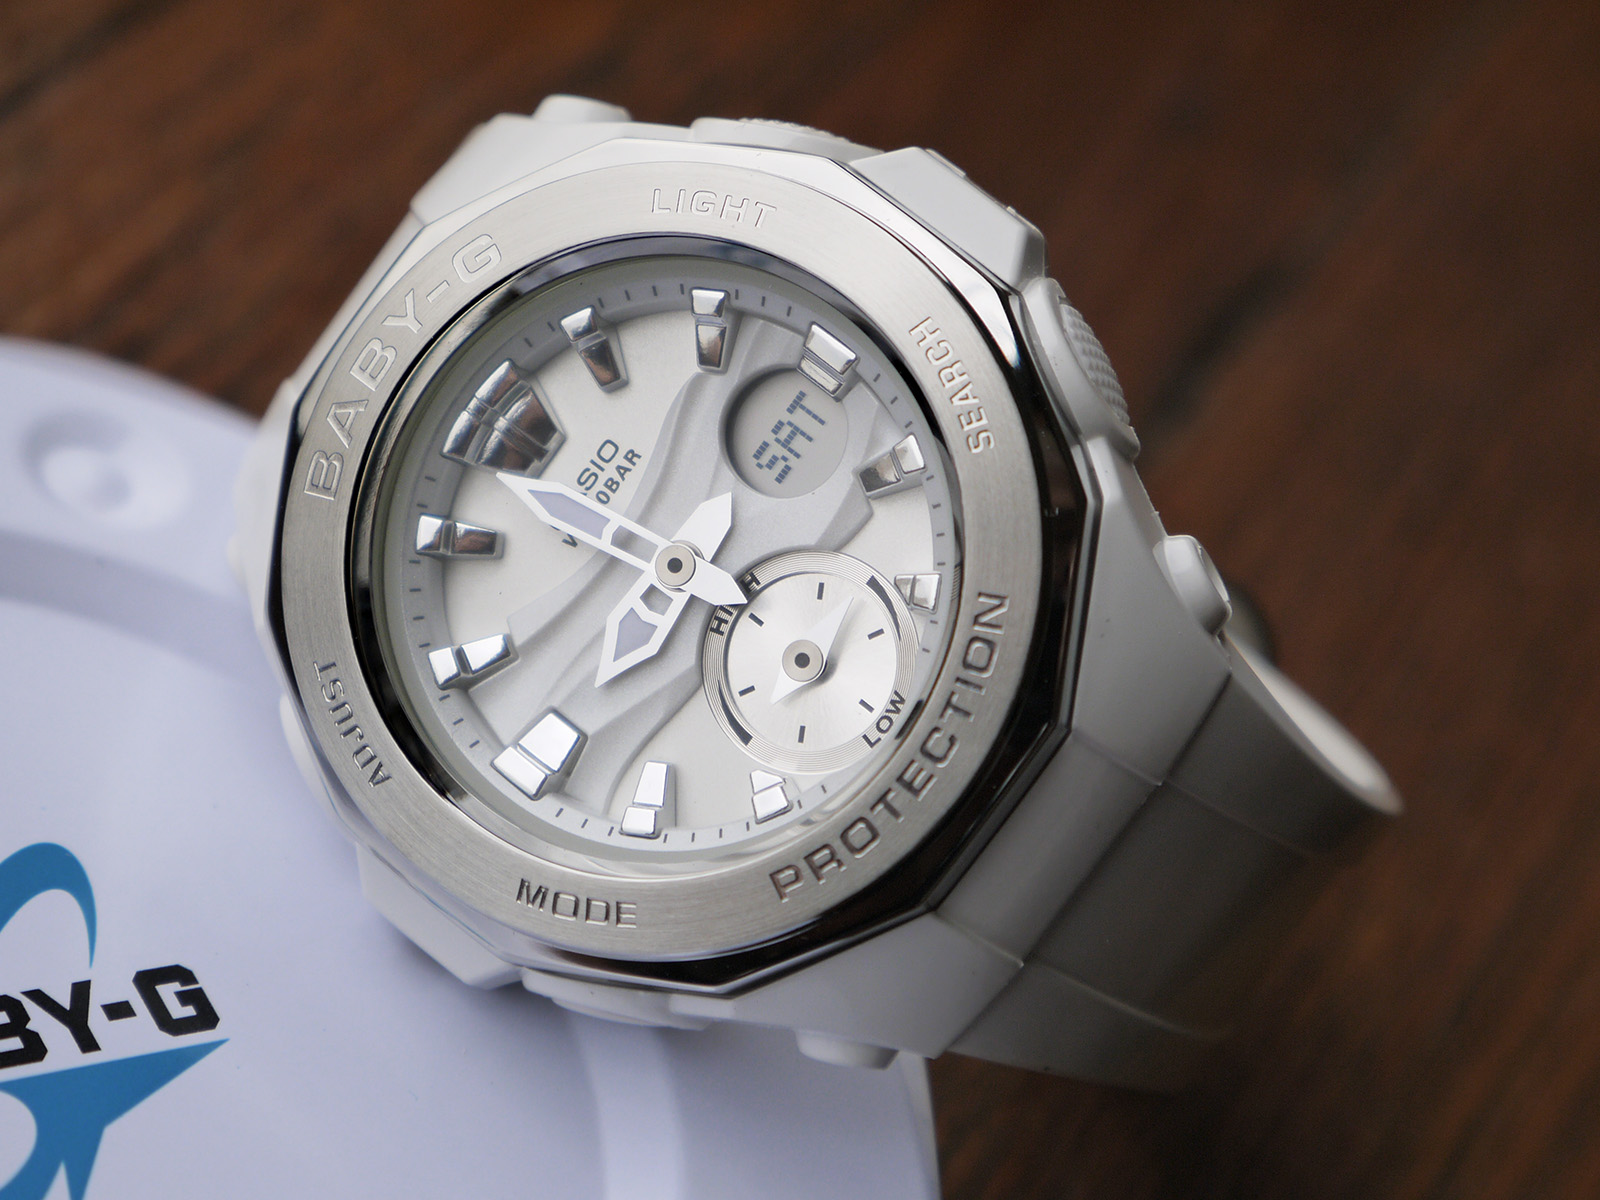 Casio BGA-220-7A Baby-G White-Silver Watch